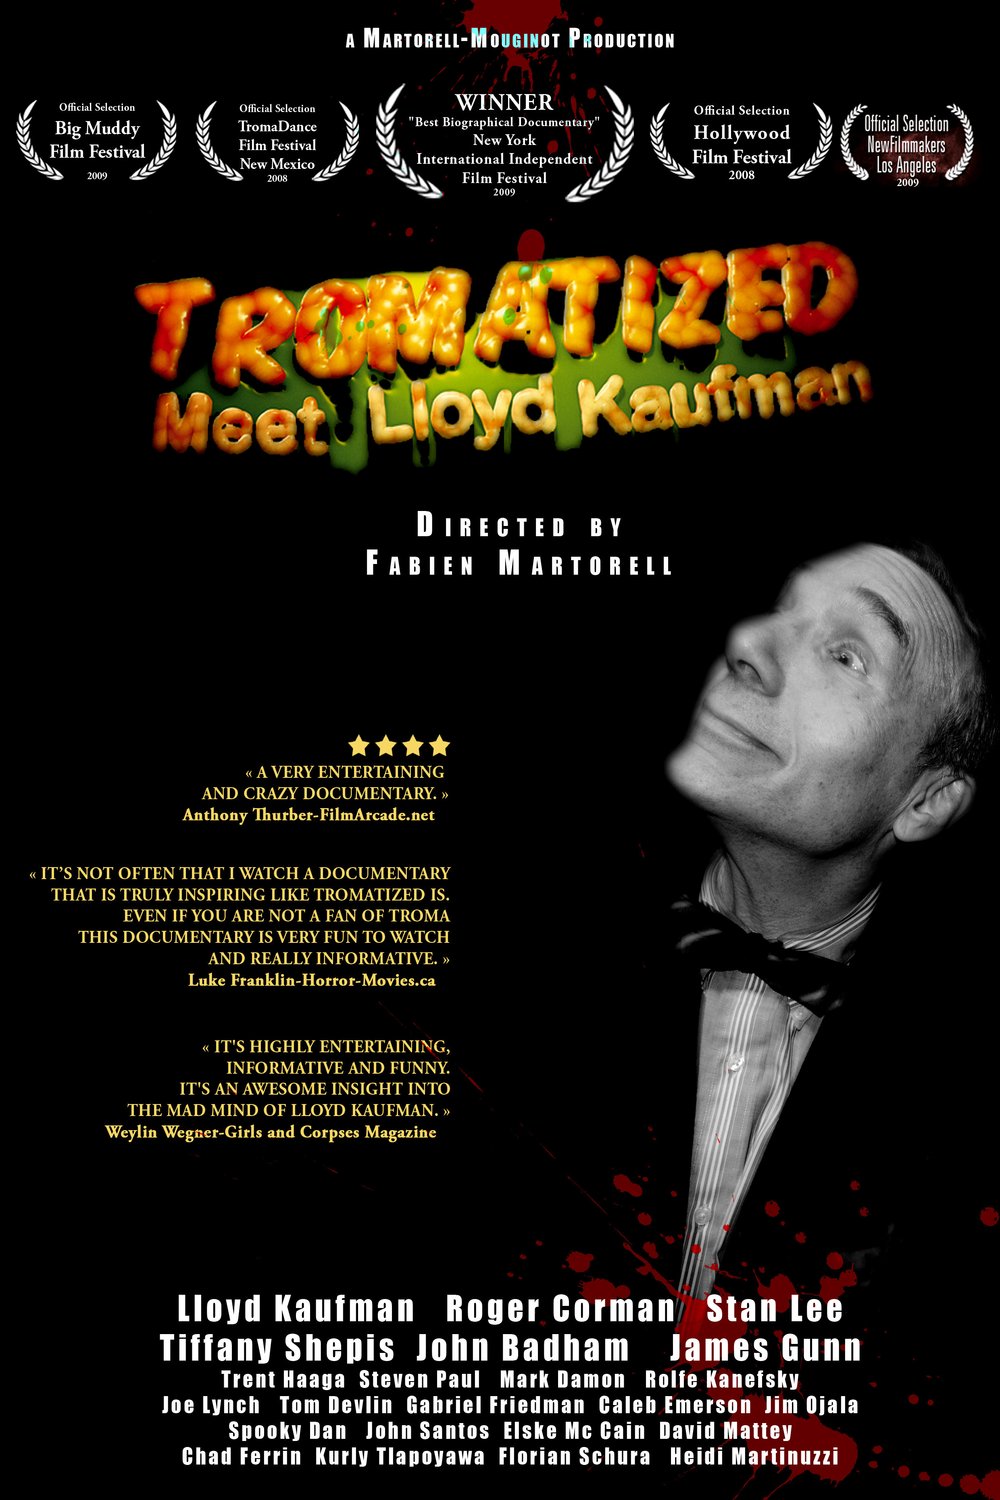 Poster of the movie Tromatized: Meet Lloyd Kaufman